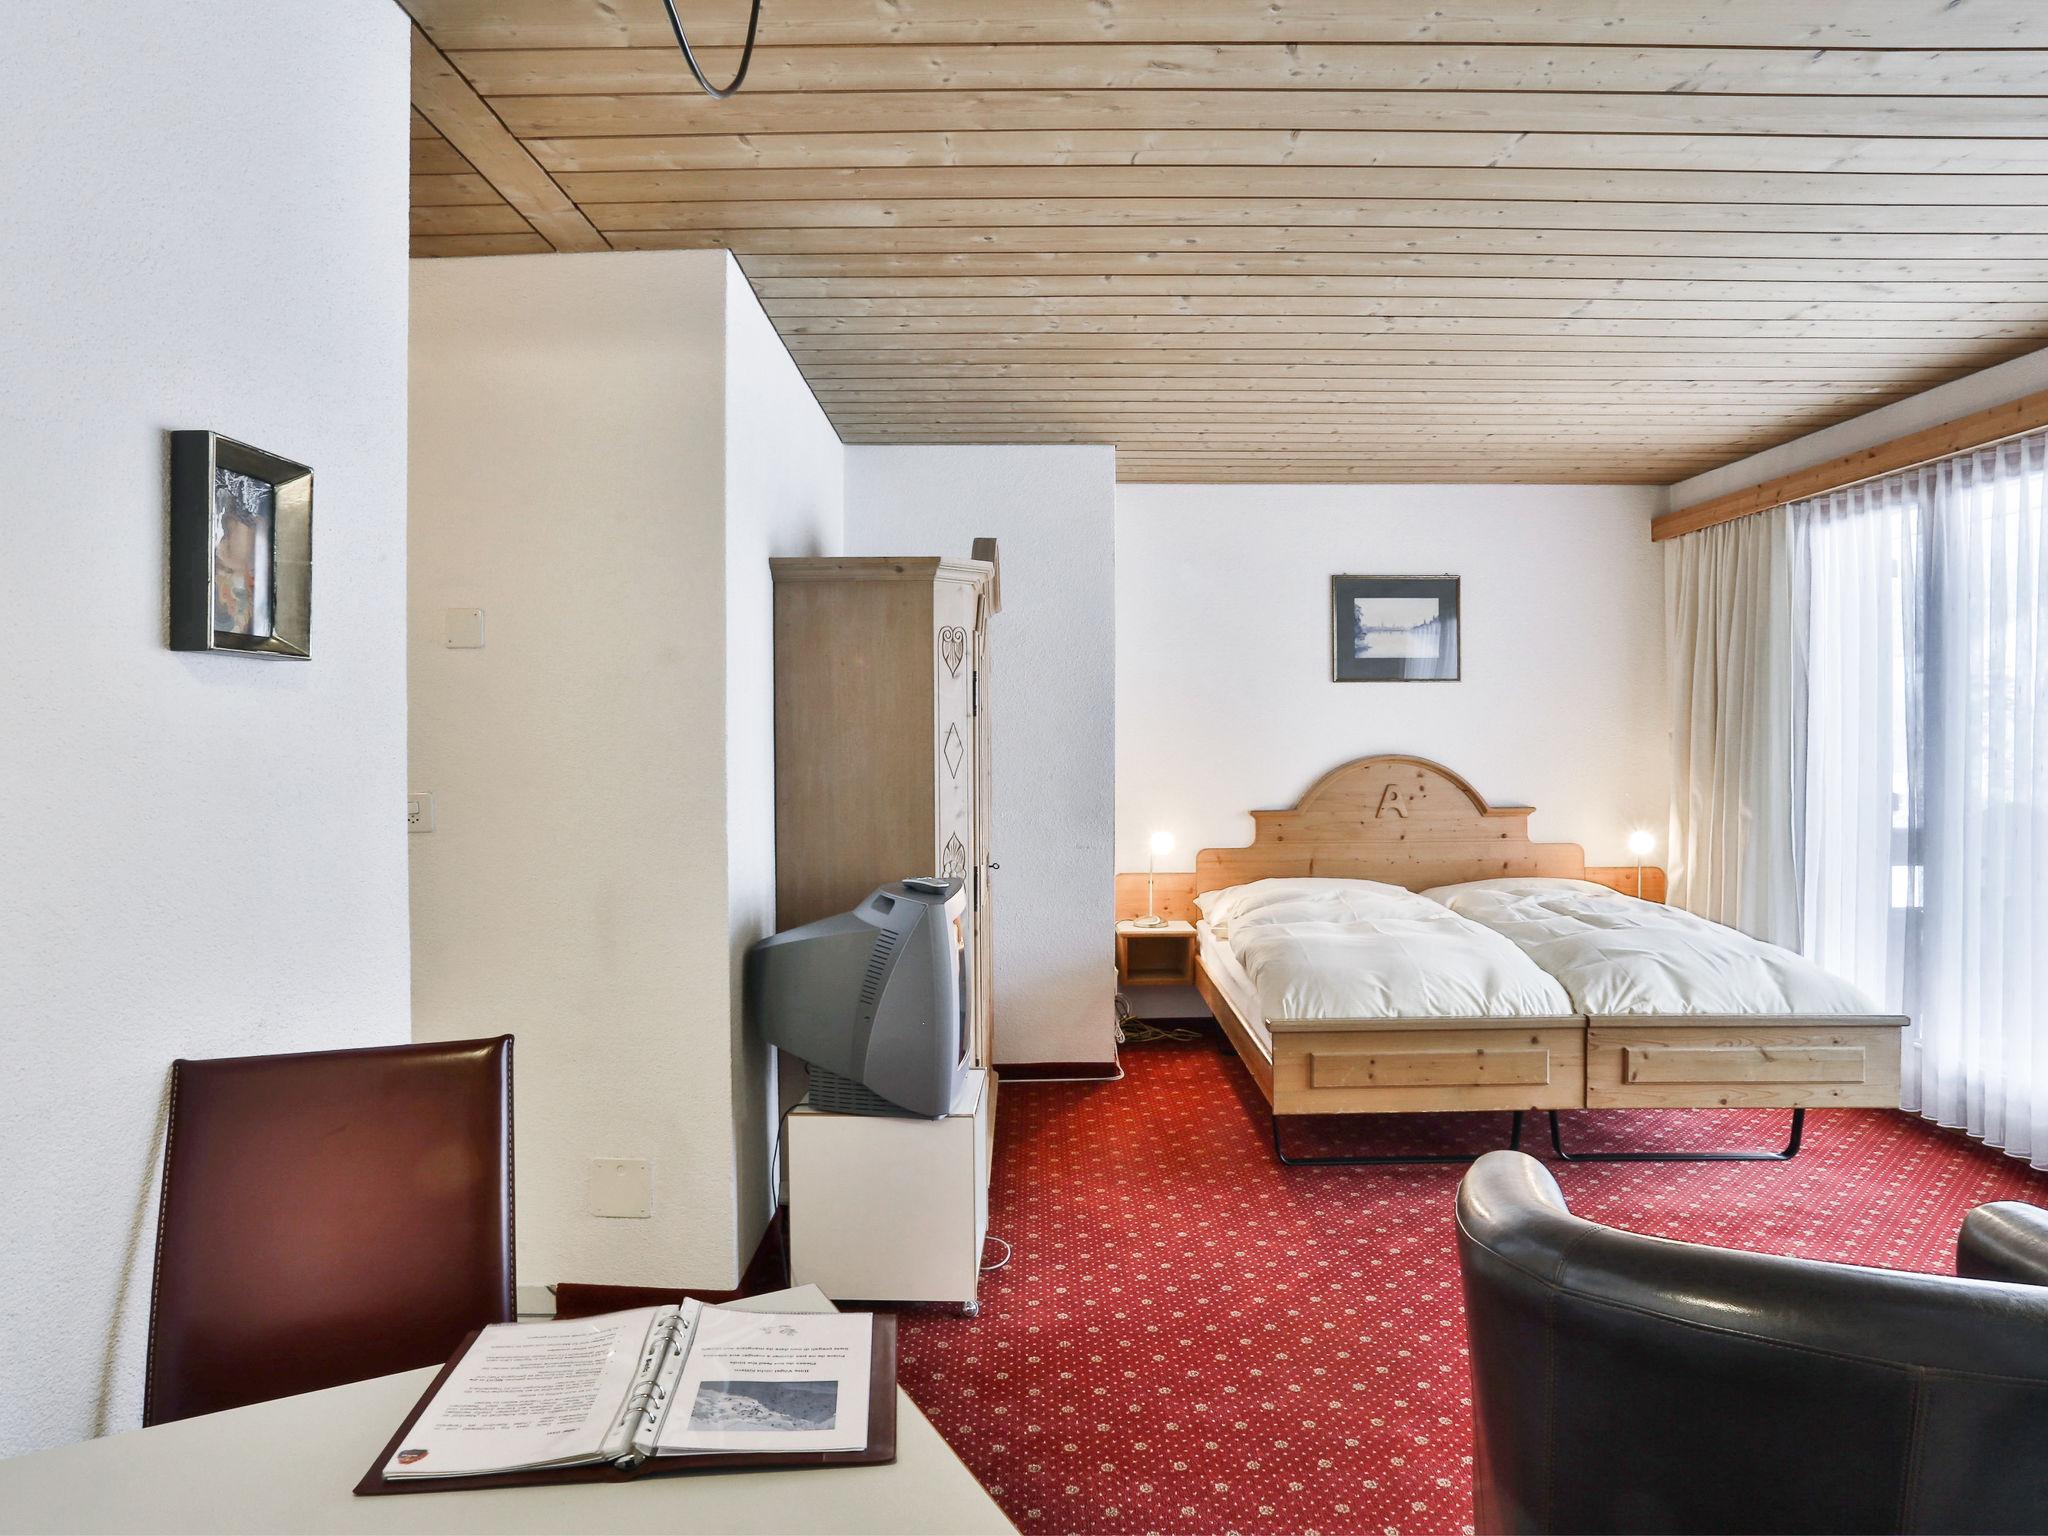 Foto 7 - Apartment in Grindelwald mit blick auf die berge